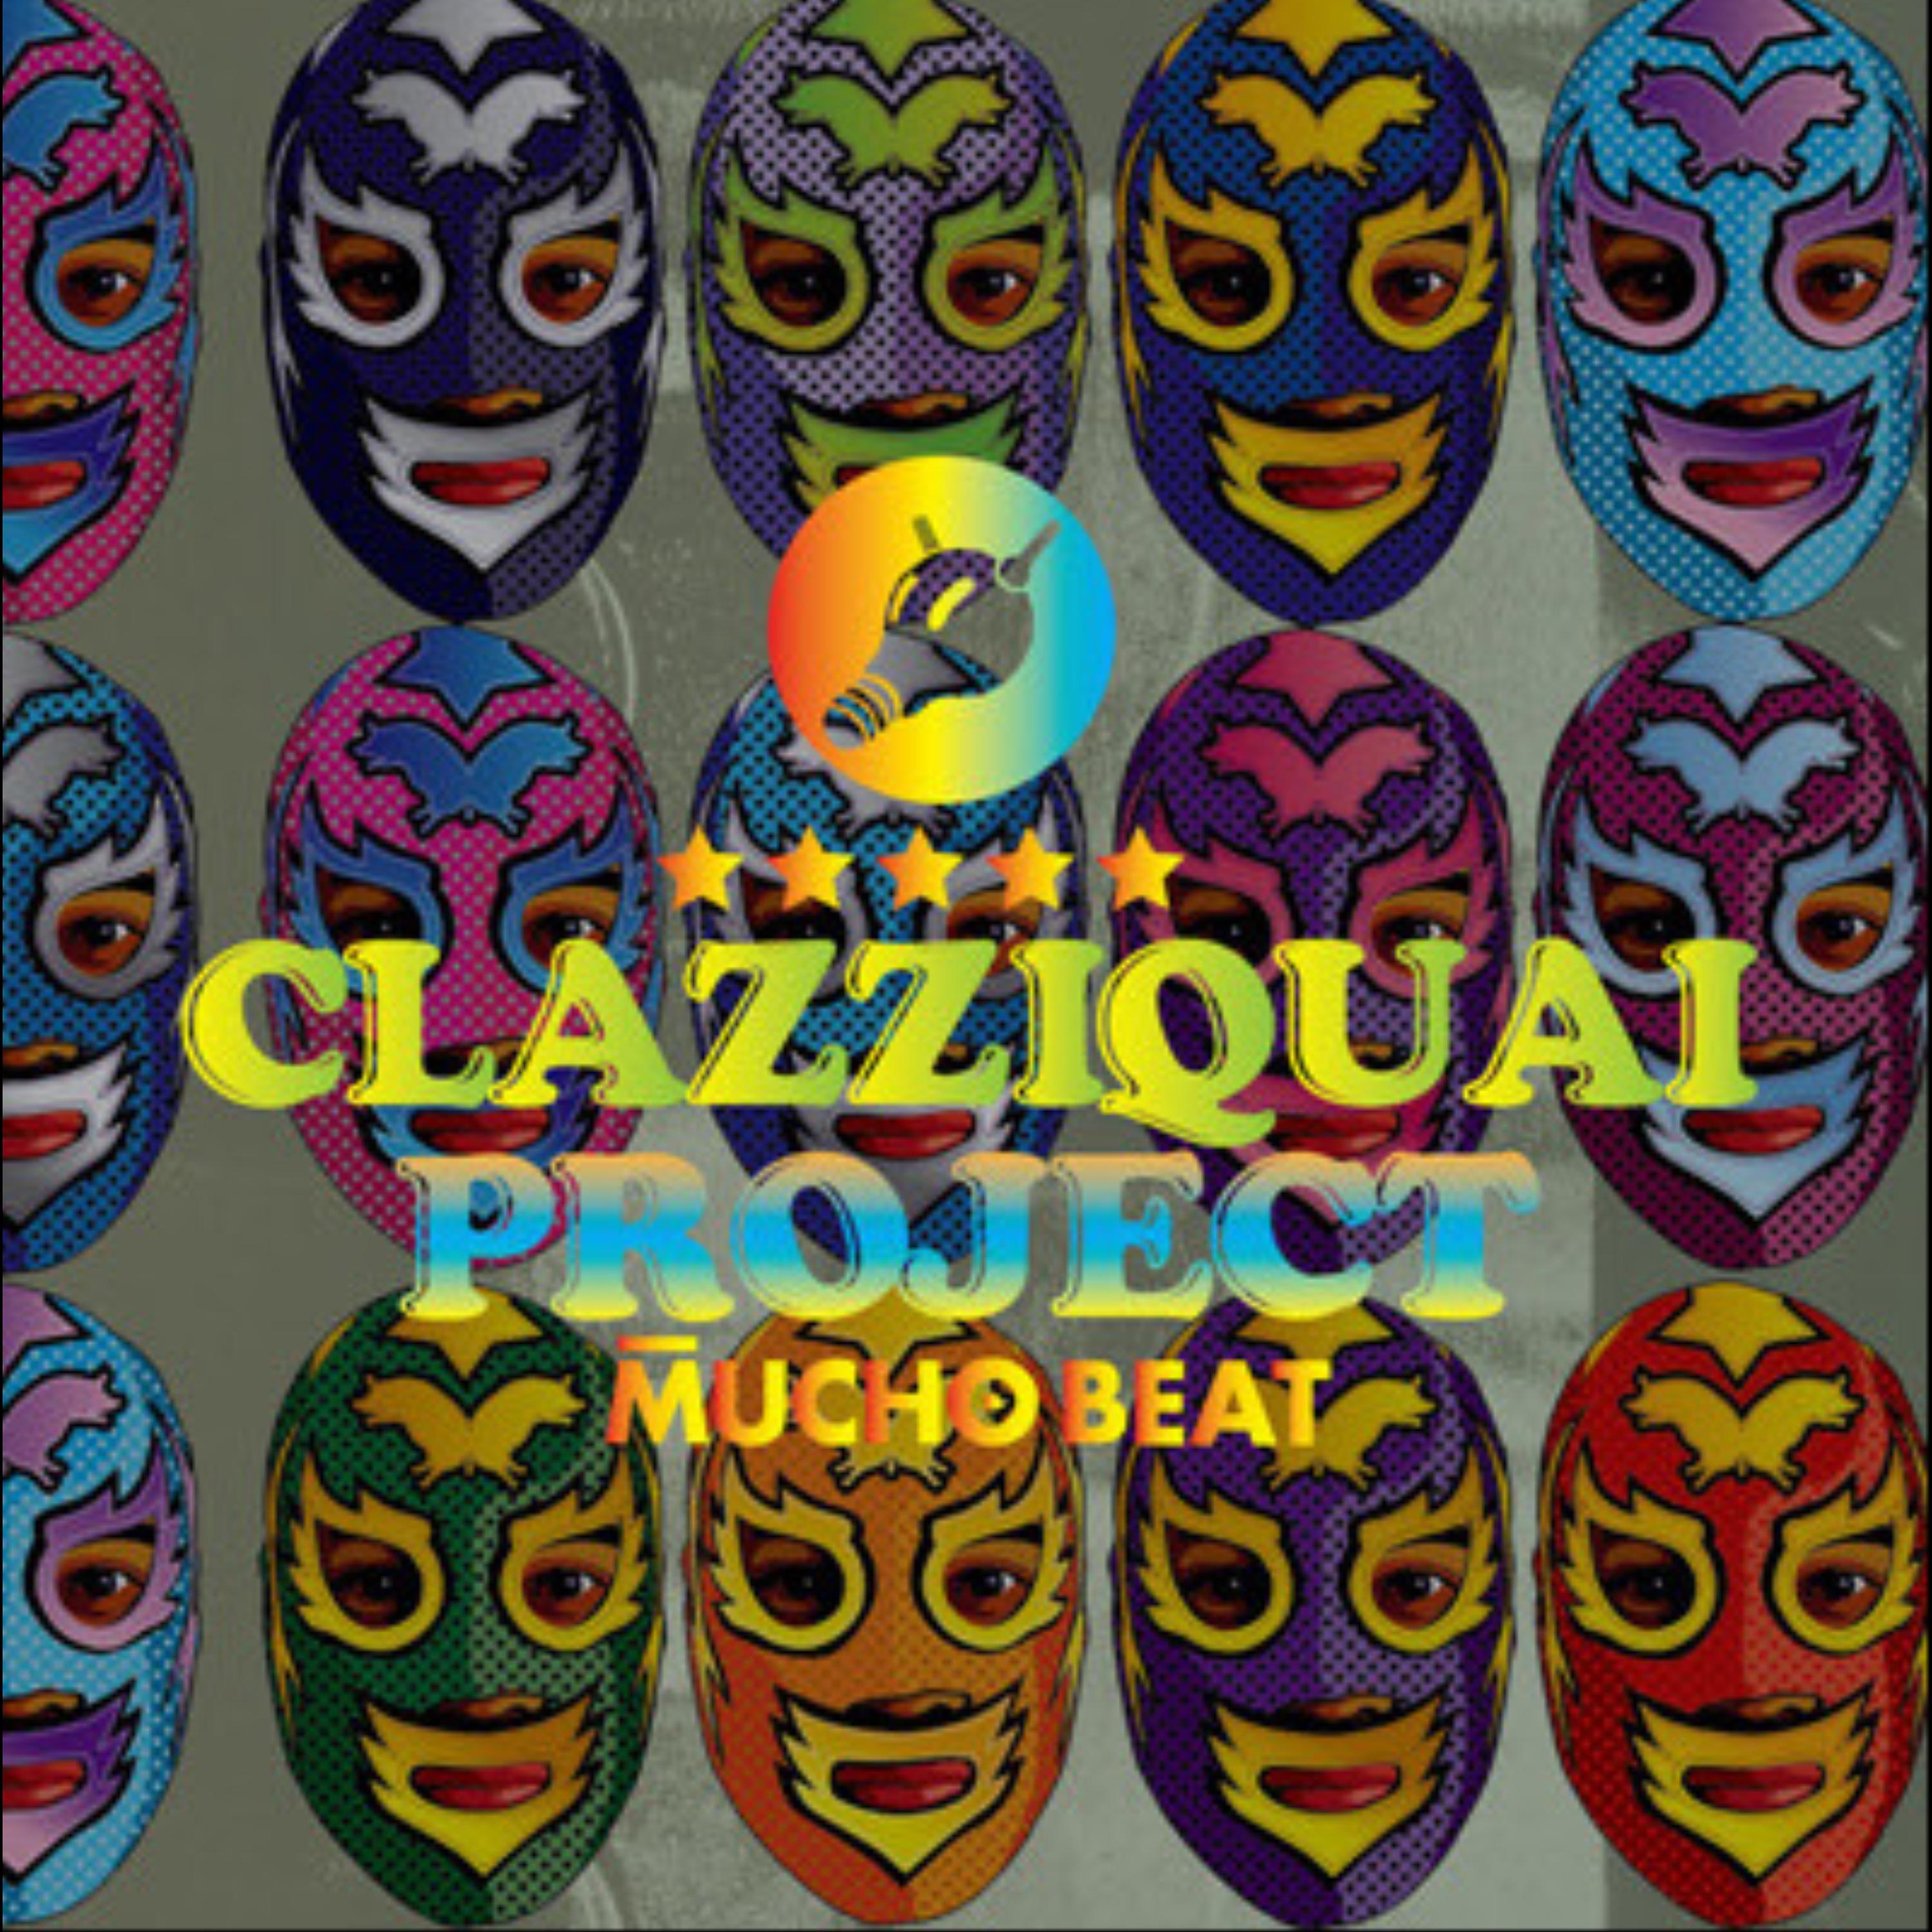 Clazziquai - Affection / 4Step 4Ward mix - Han (W)